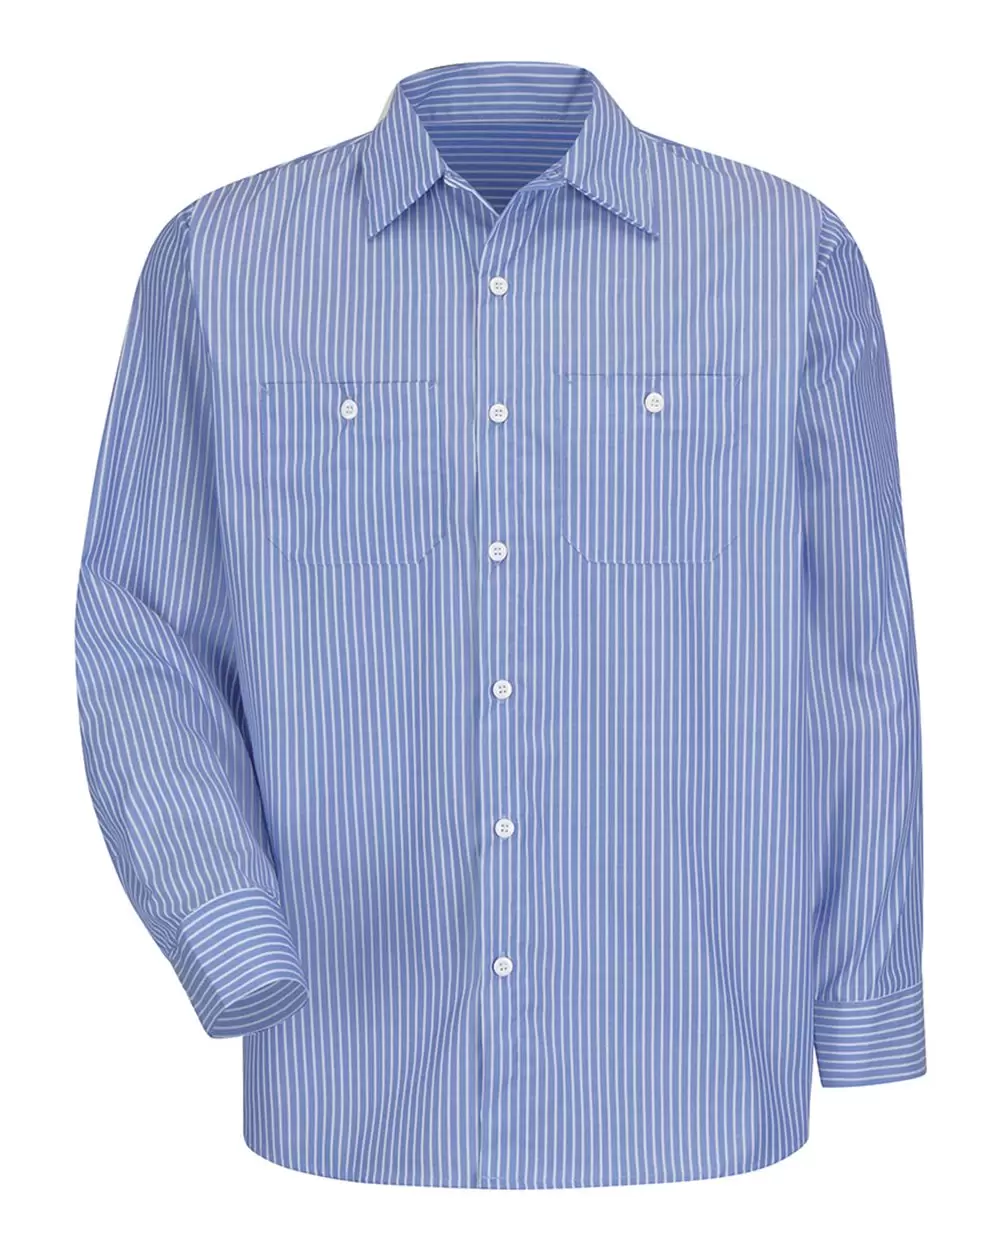 Red Kap CS10 Long Sleeve Striped Industrial Work Shirt - Blue/White